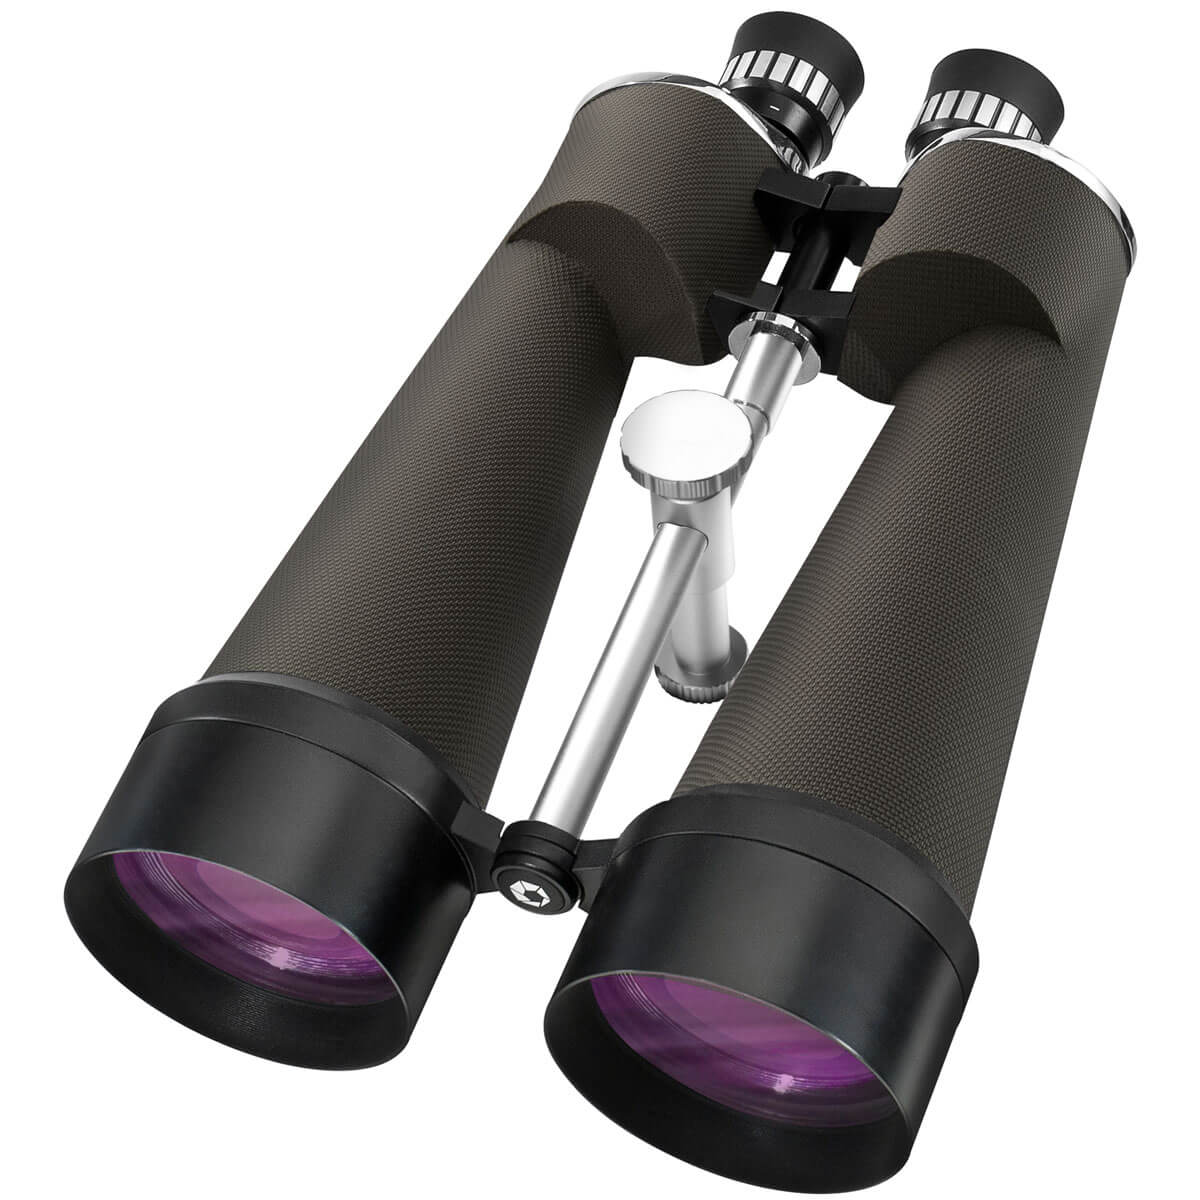 25x100mm WP Cosmos Astronomical Binoculars by Barska